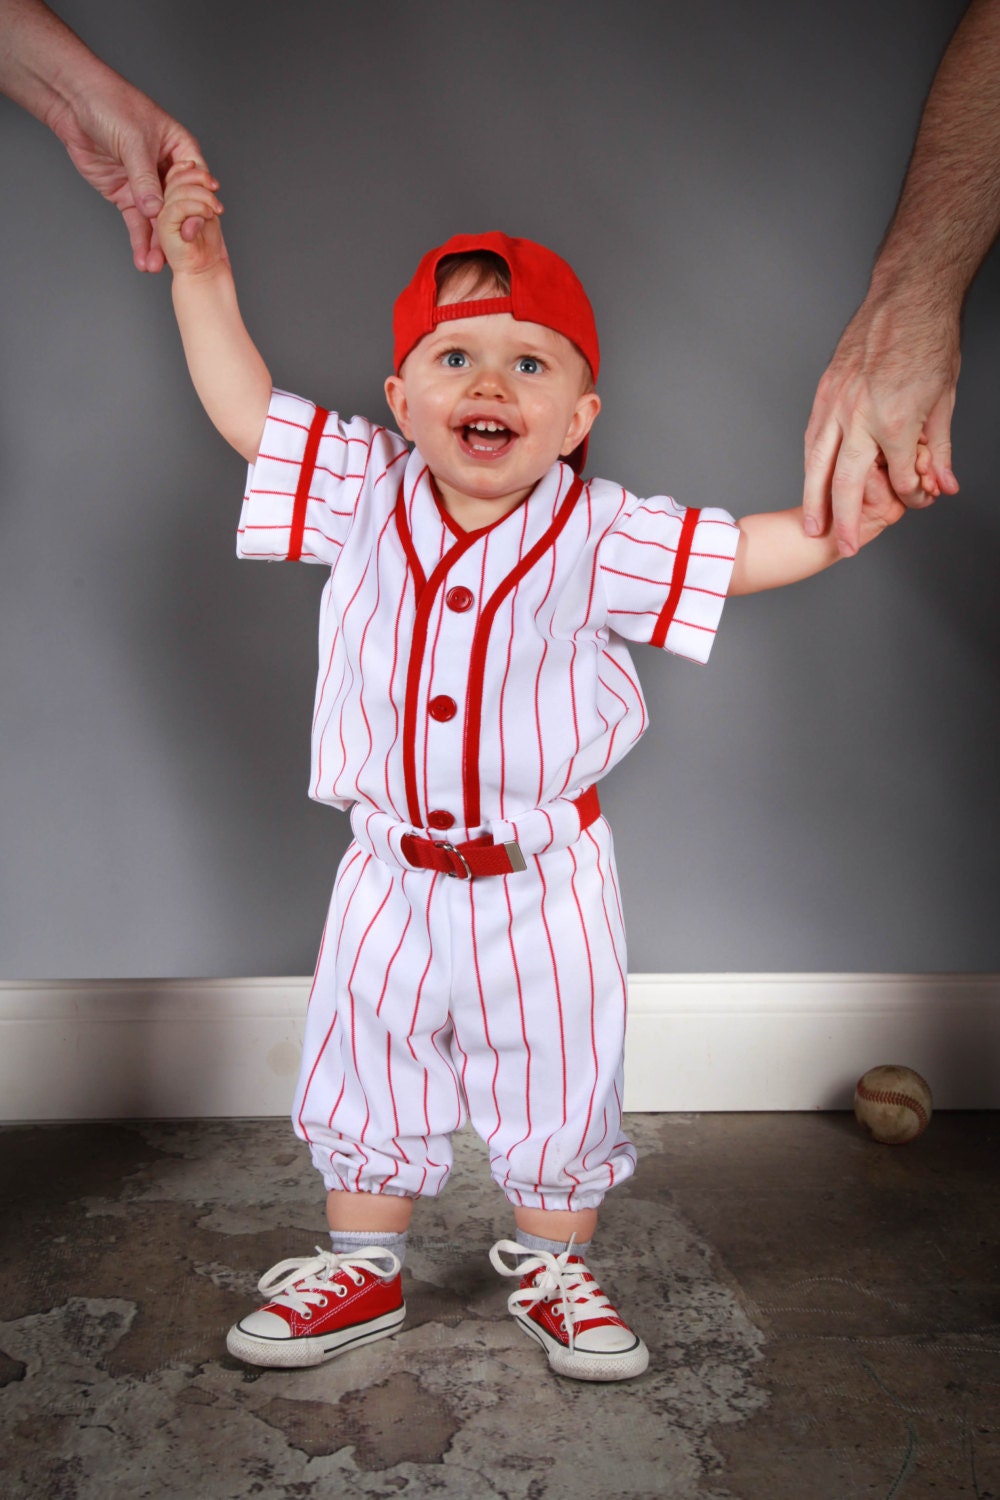 Baby Baseball Uniform 48